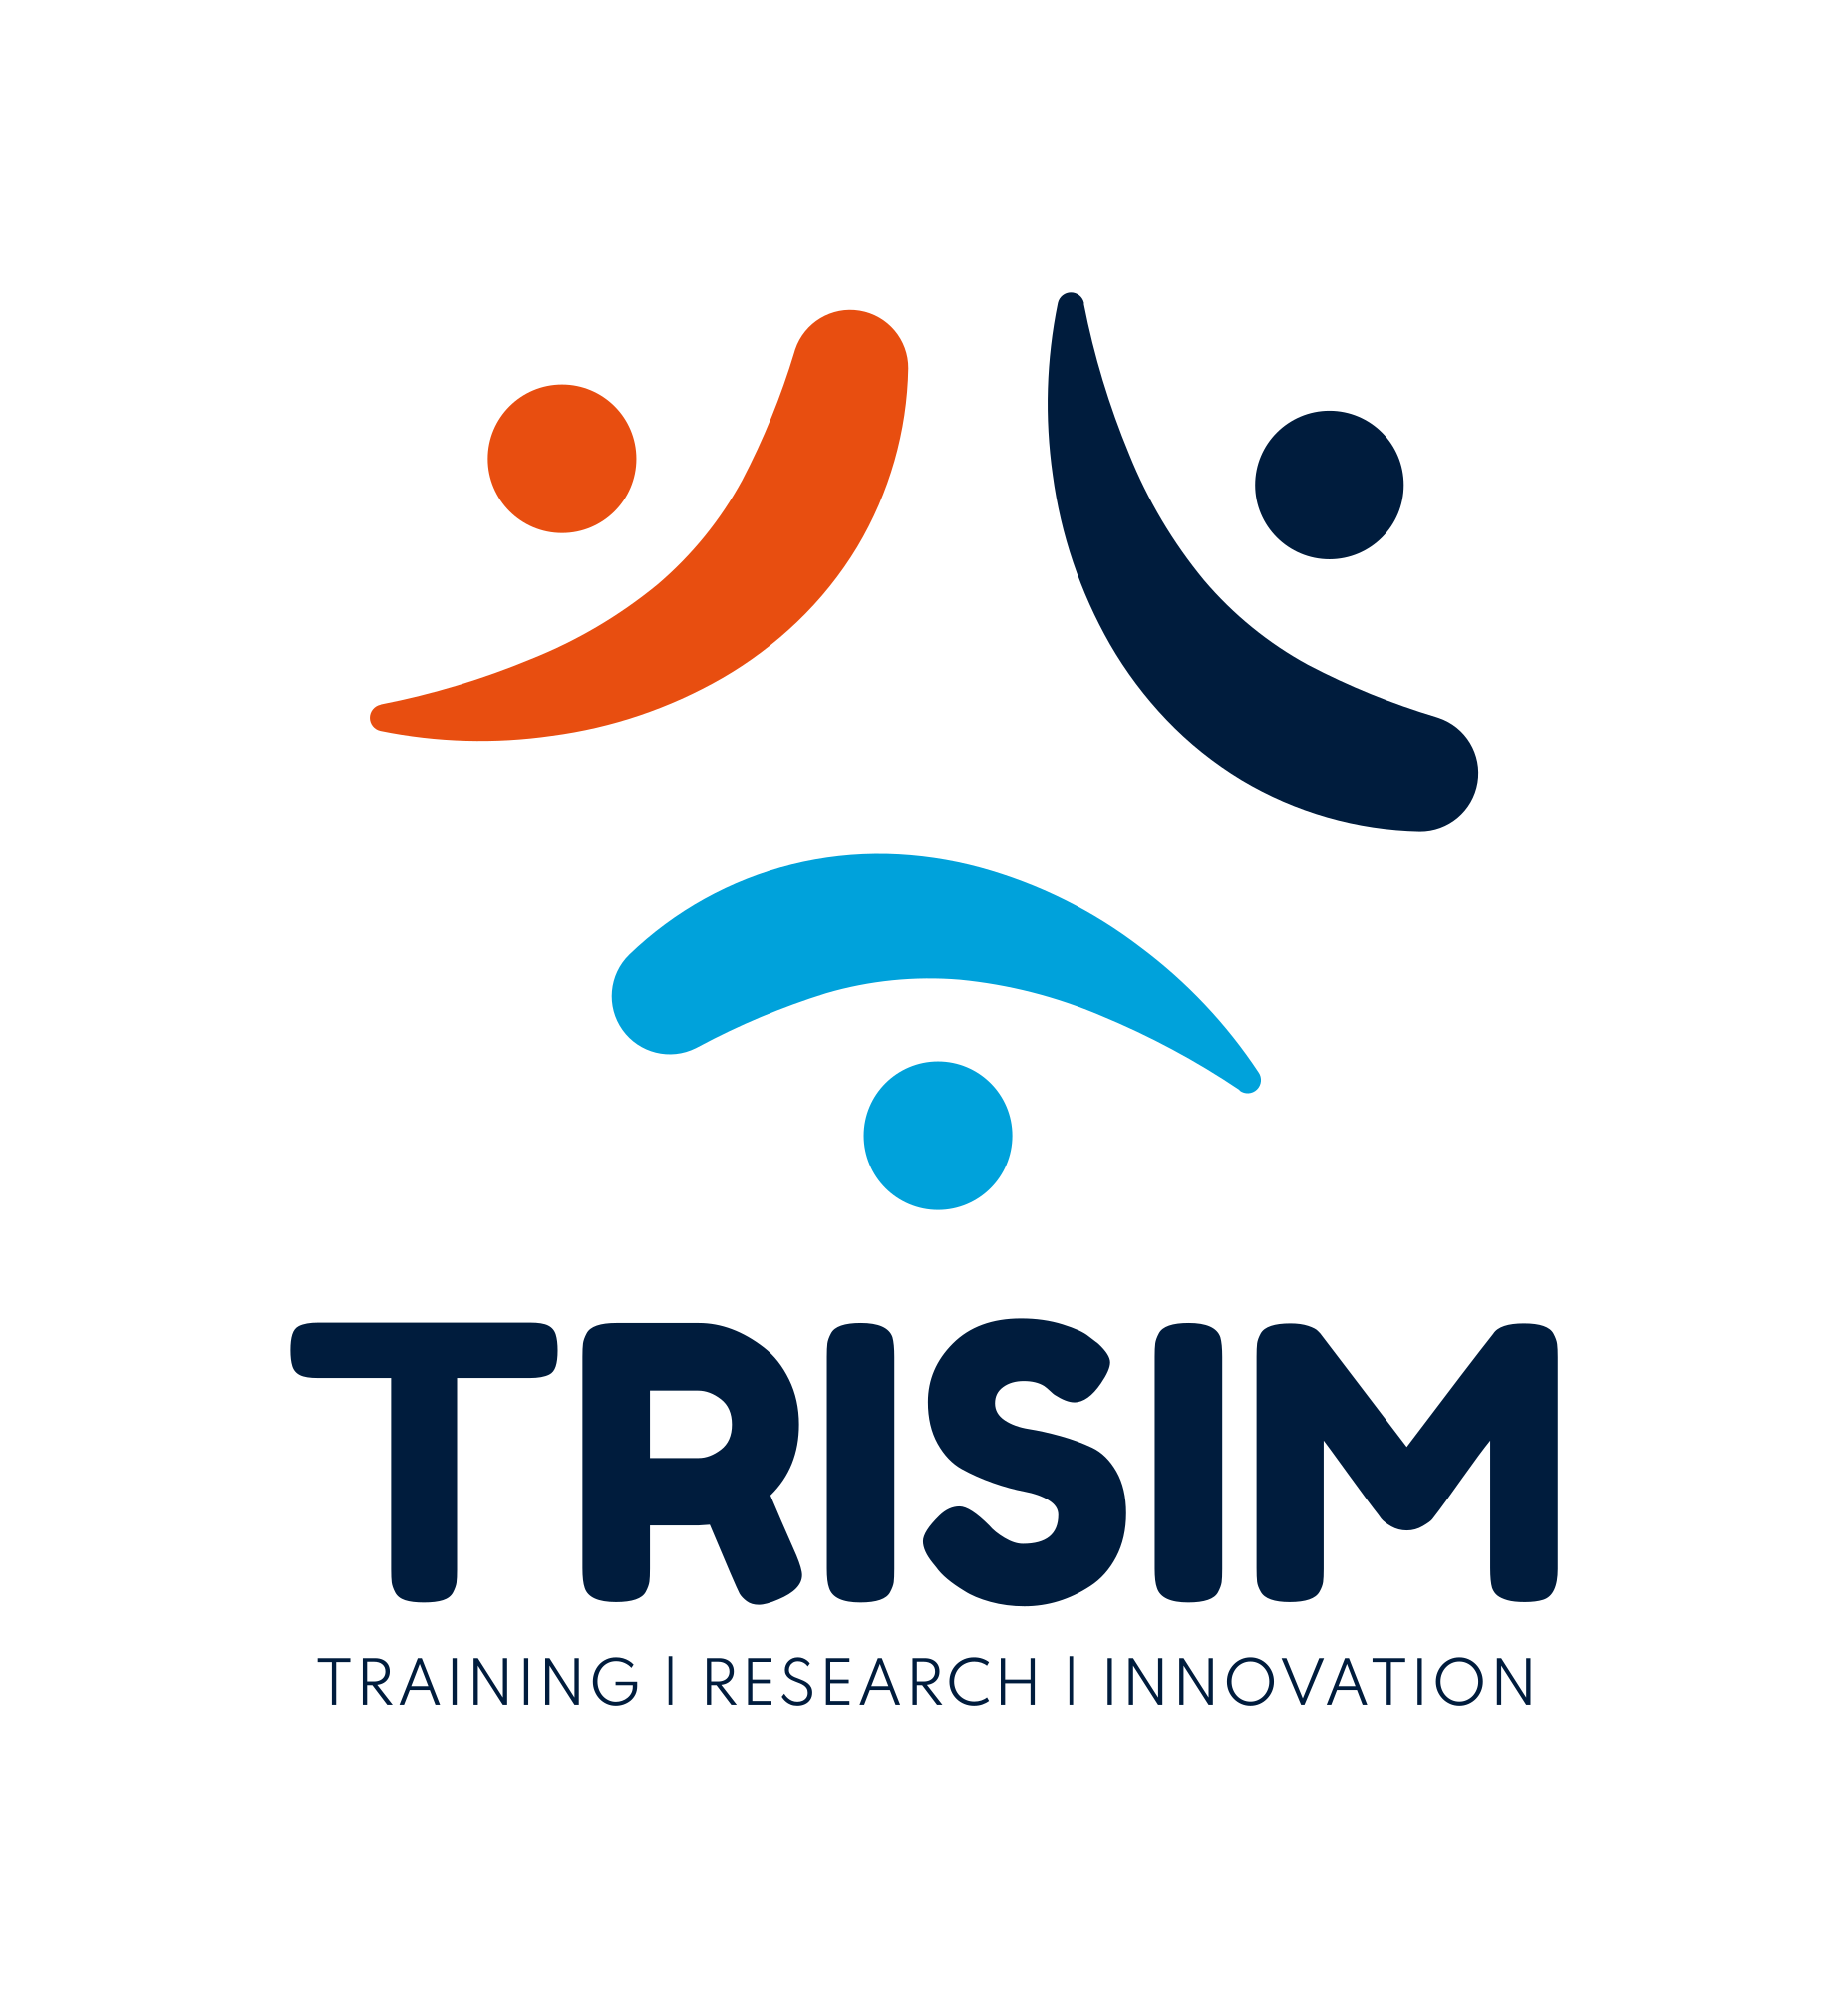 trisim_logo